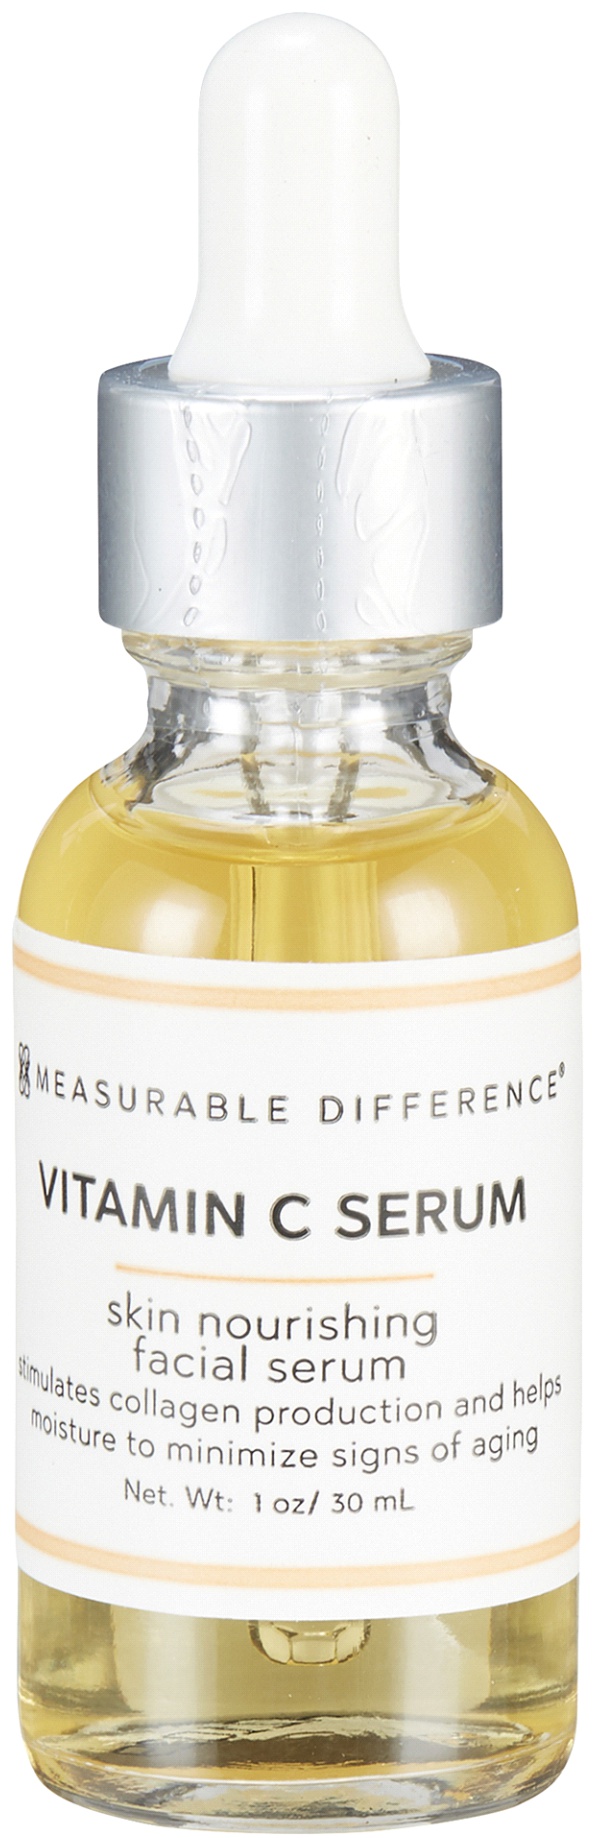 Measurable Difference Vitamin C Serum